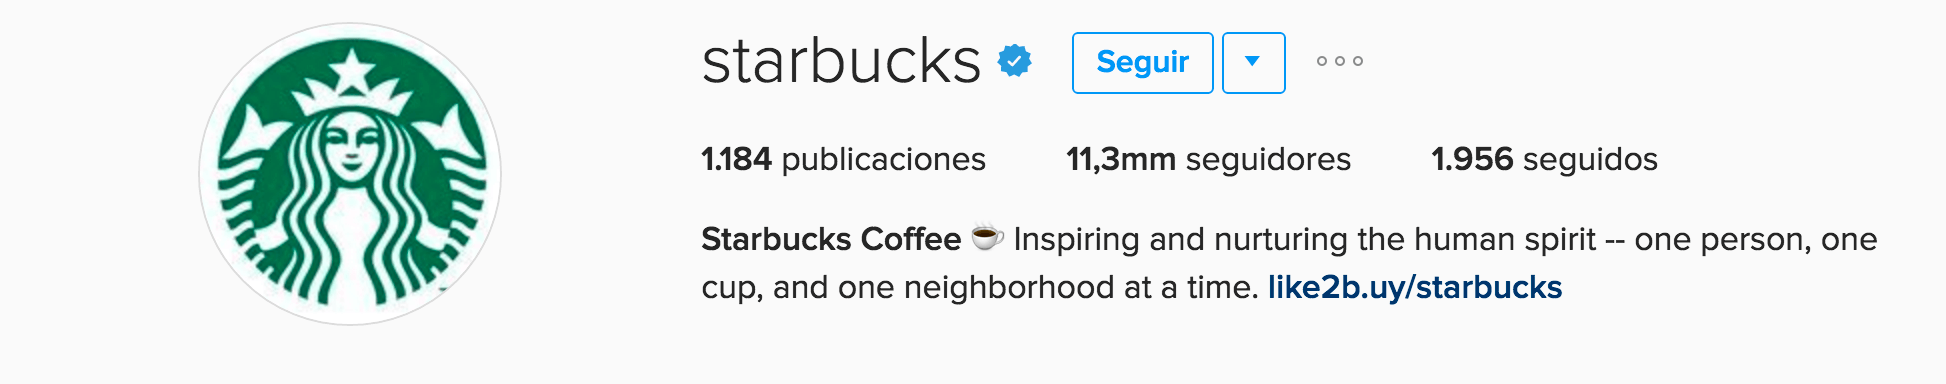 starbucks usos de instagram para empresas